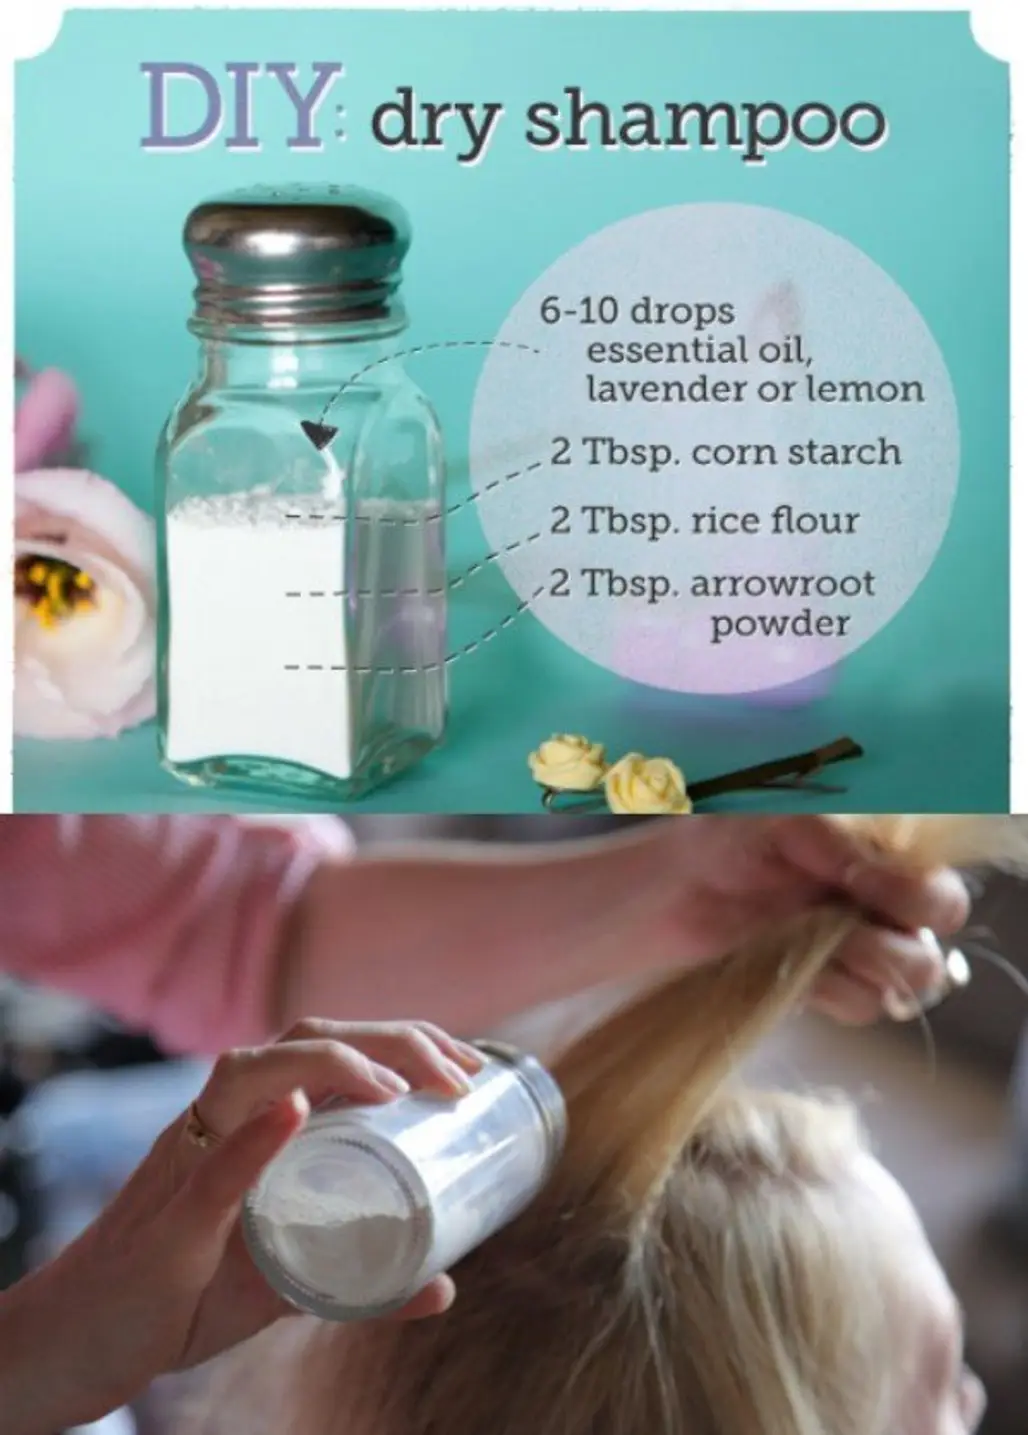 Make You Own Dry Shampoo!